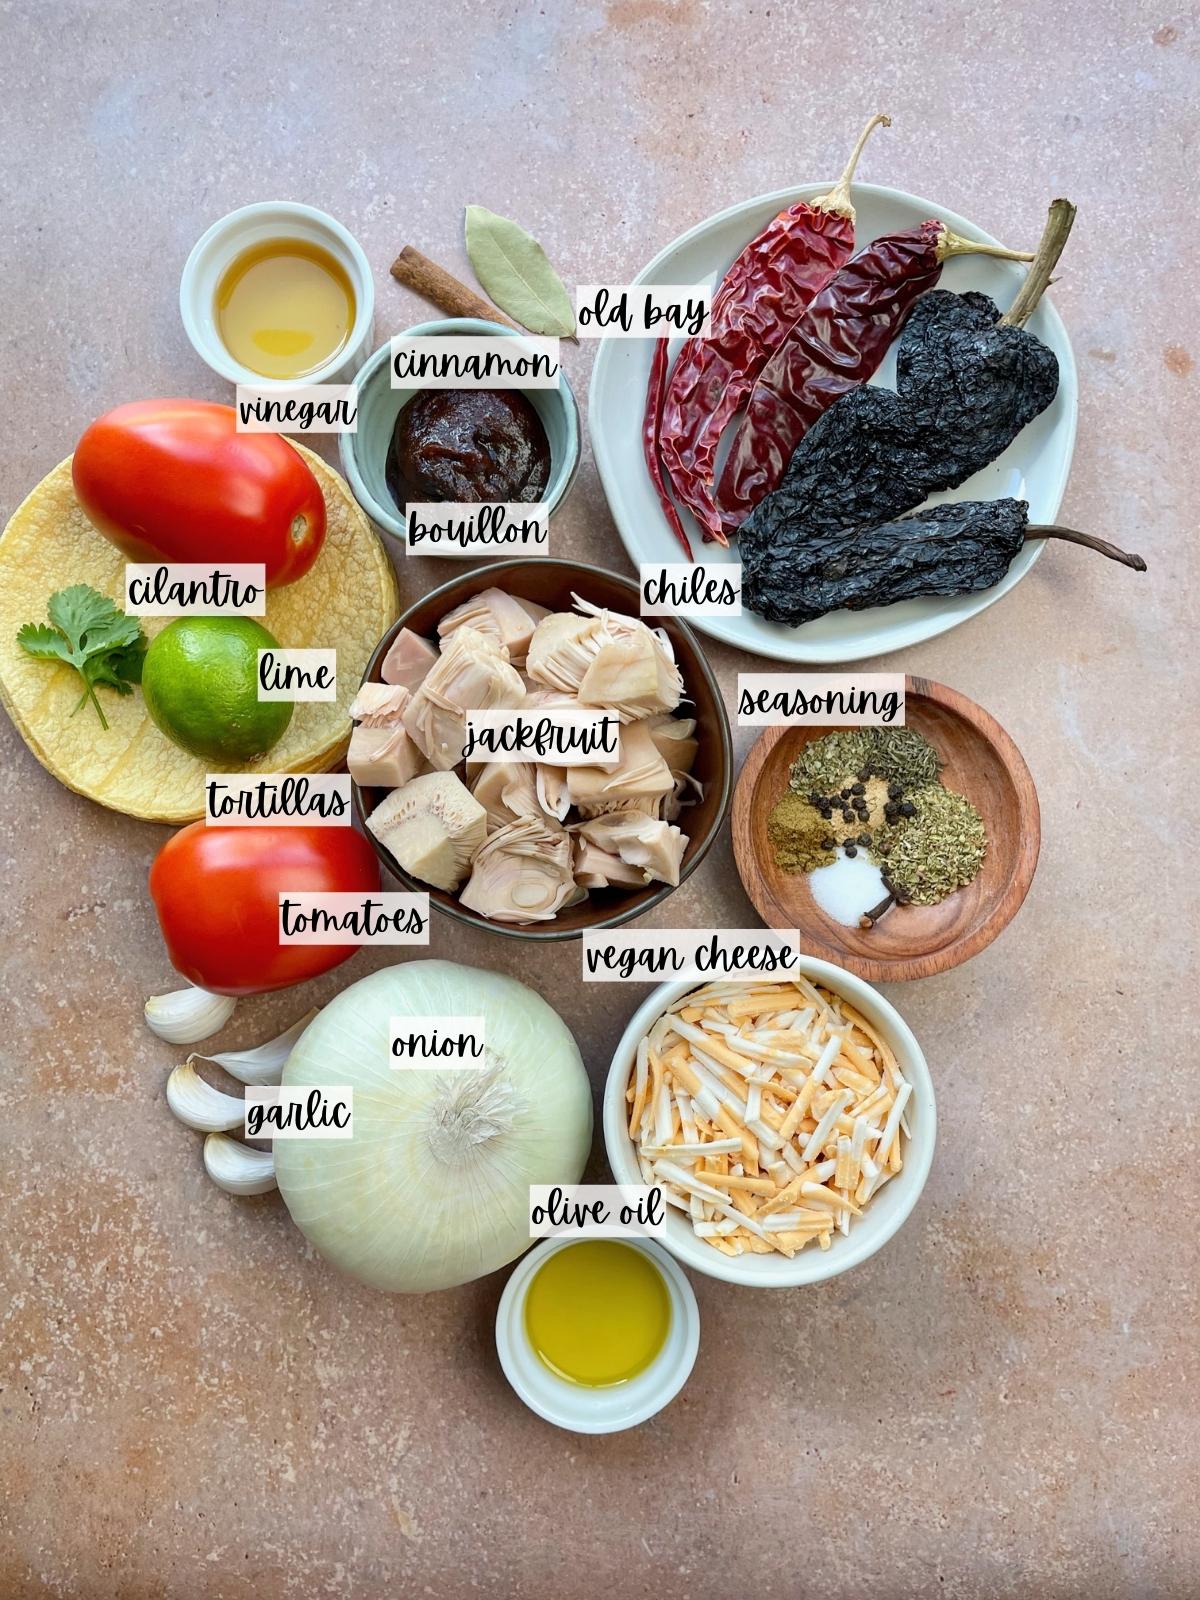 Labeled ingredients for jackfruit birria.